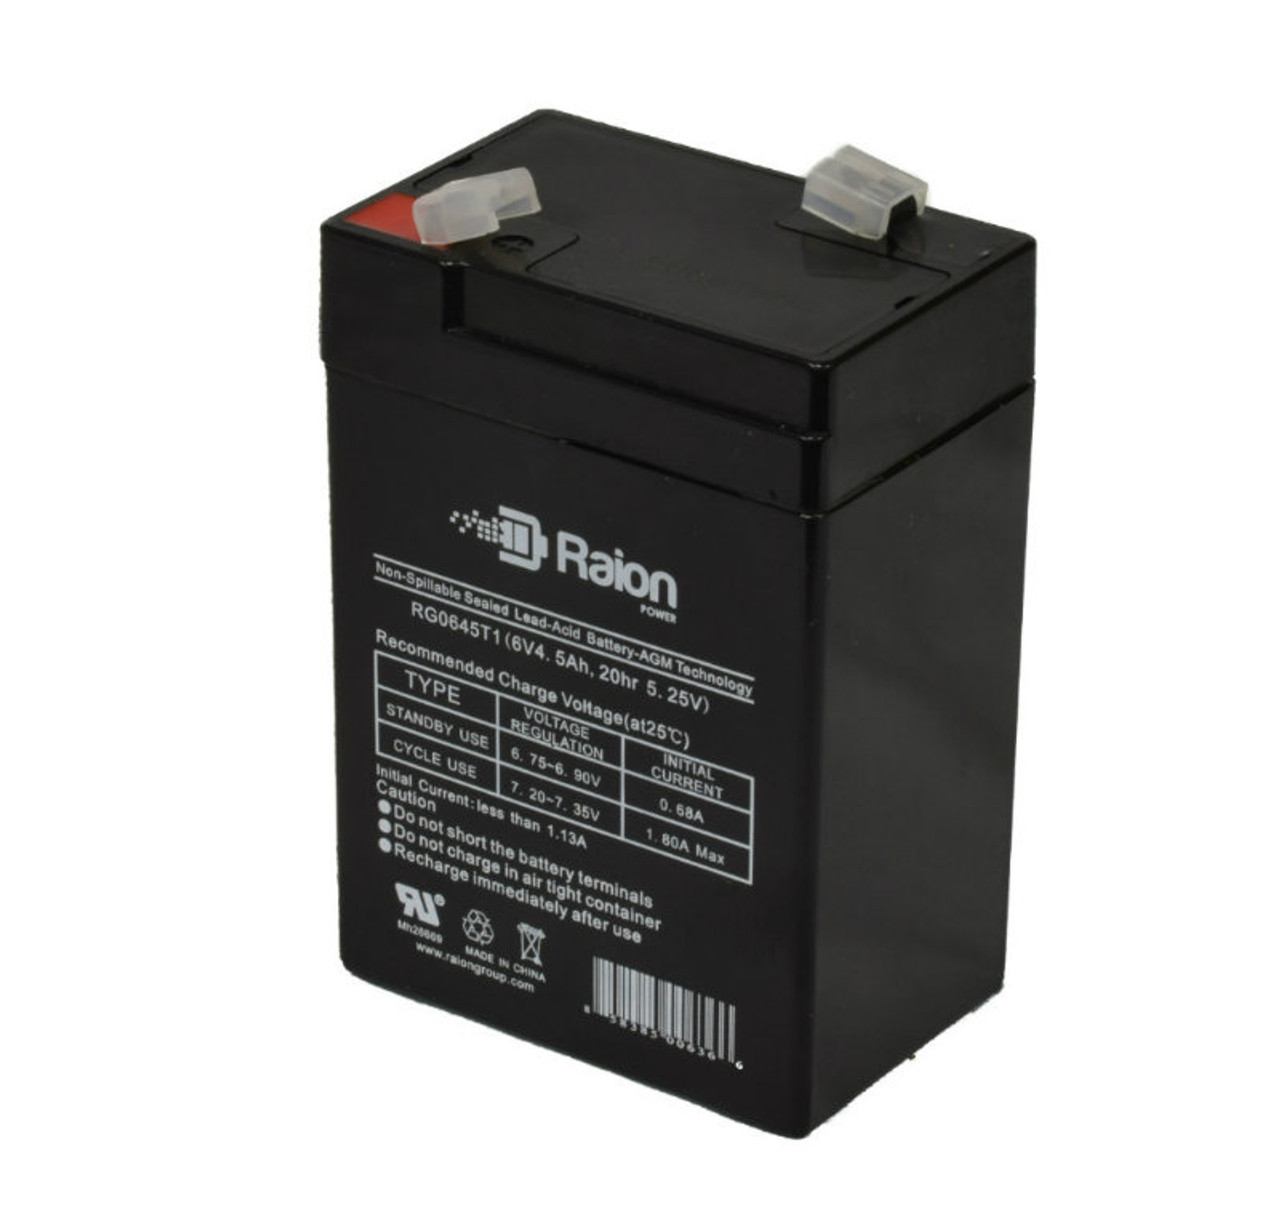 Raion Power RG0645T1 6V 4.5Ah Replacement Battery Cartridge for Sonnenschein A206/4.0S